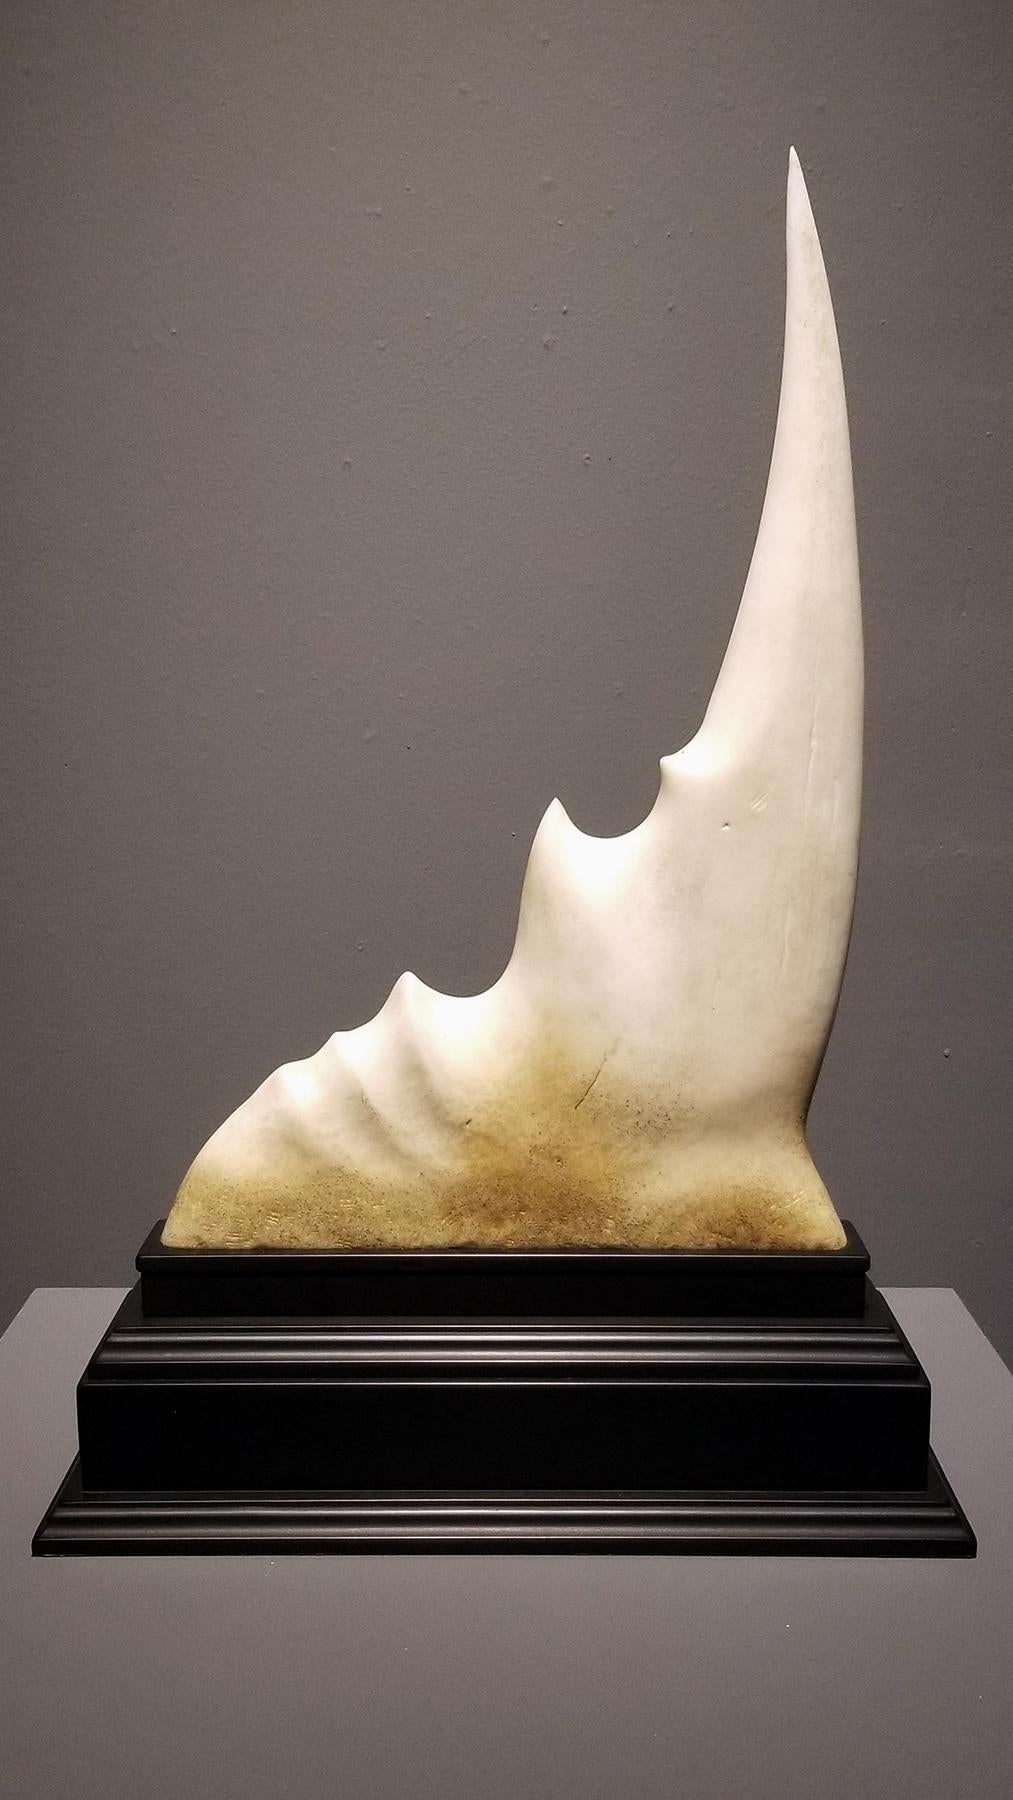 Tusk of the Solipsisaur von Steve Brudniak, Surreal Assemblage Study